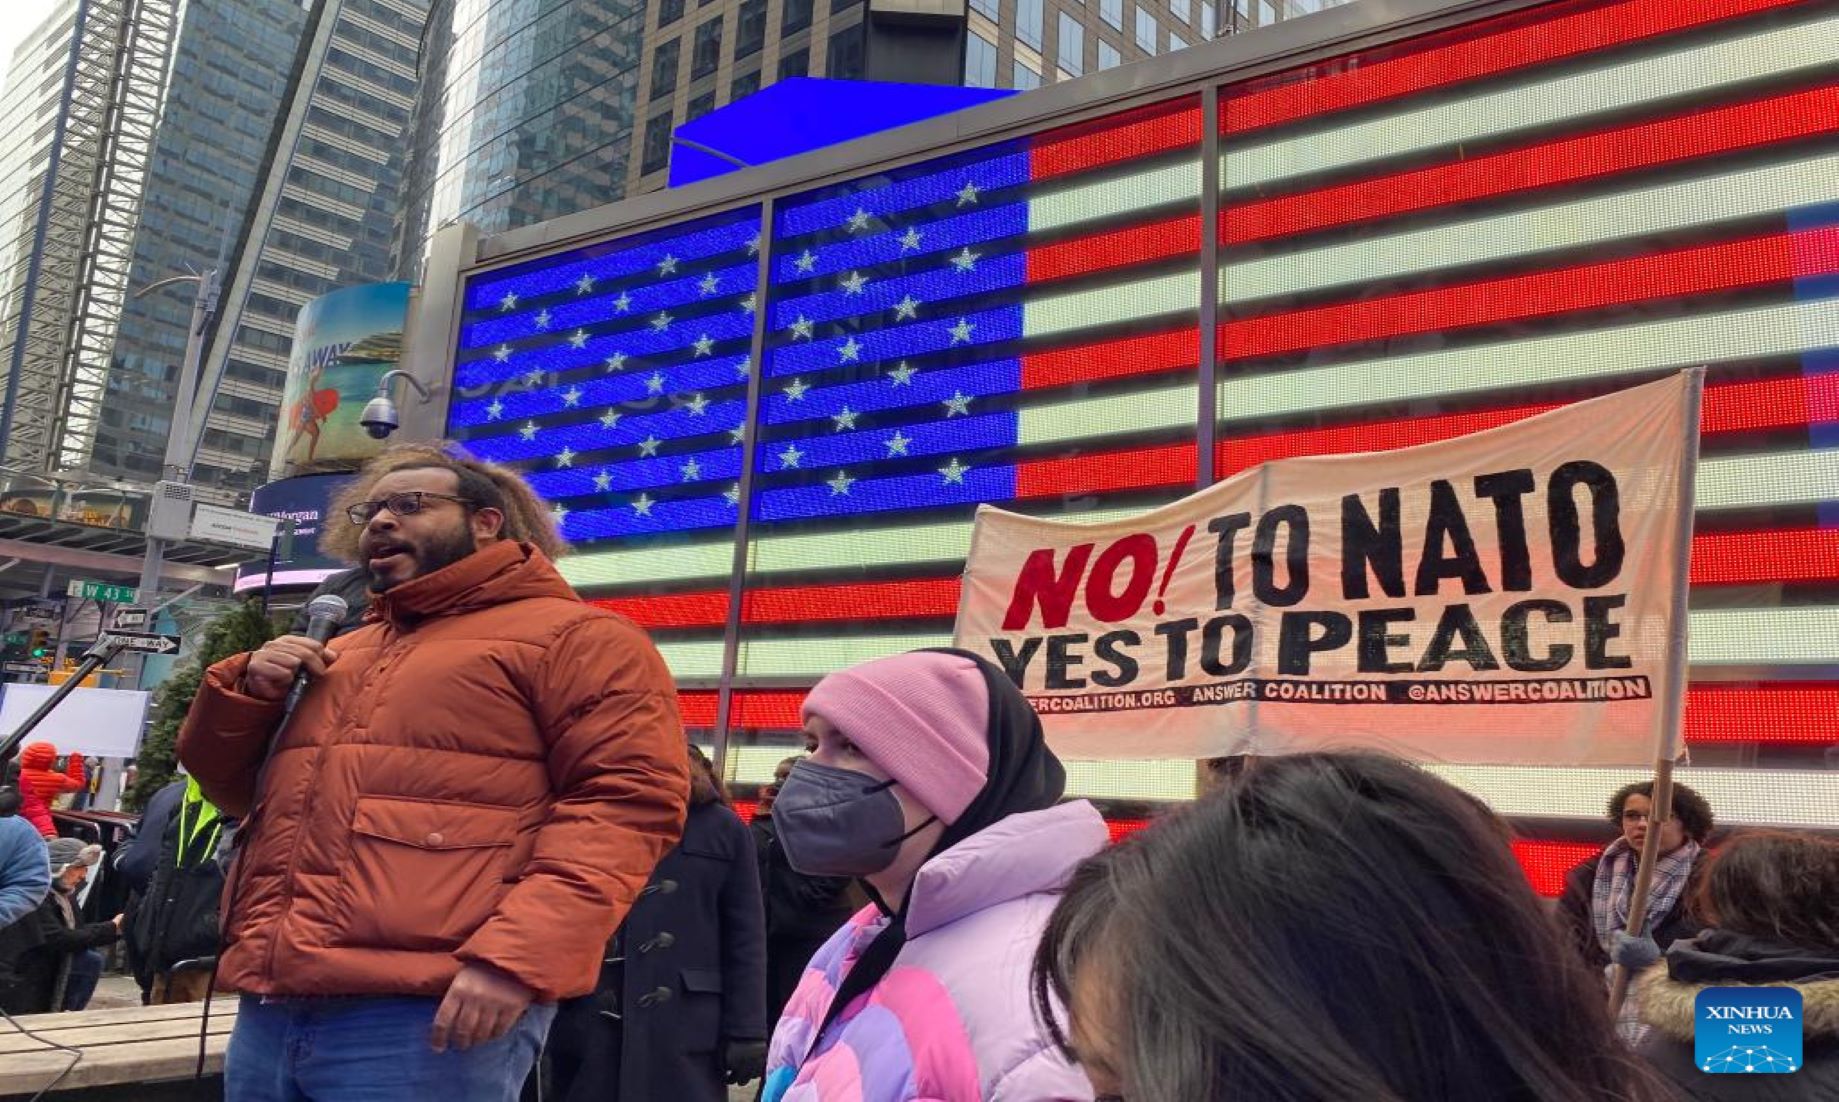 Protesters Denounced U.S. As “War Machine” At Washington Rally